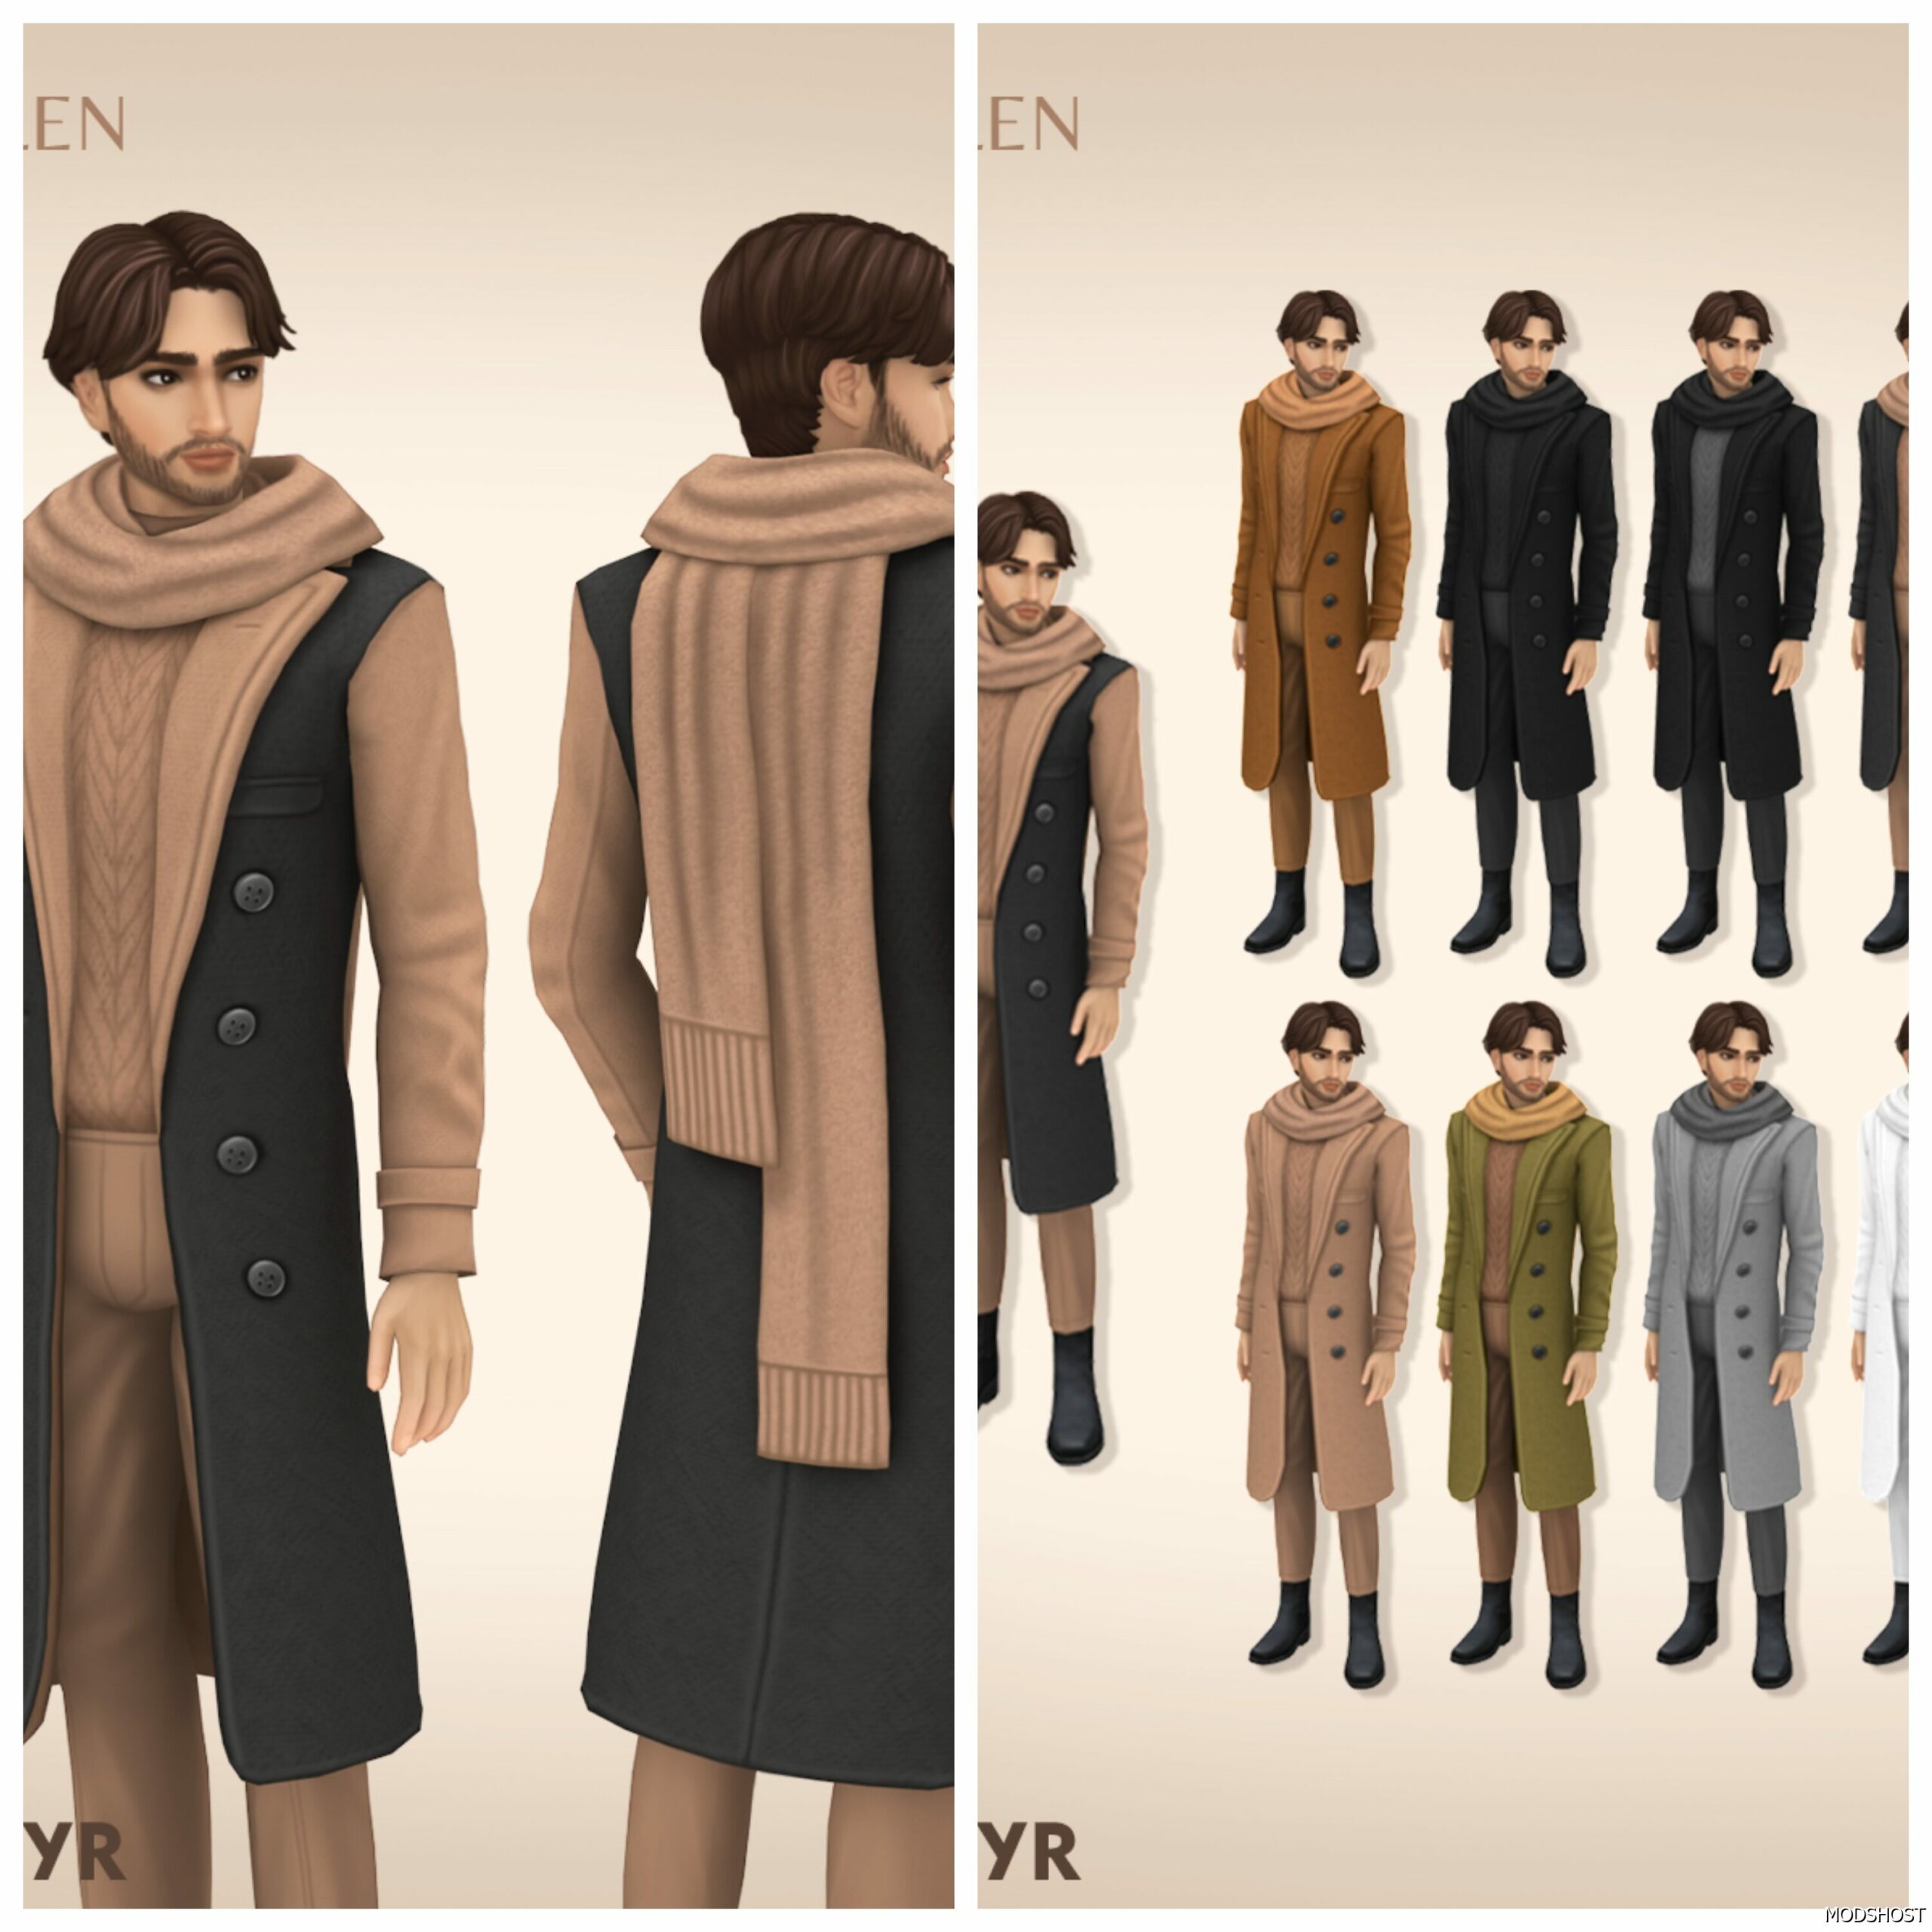 Zephyr Outfit Sims 4 Clothes Mod - ModsHost